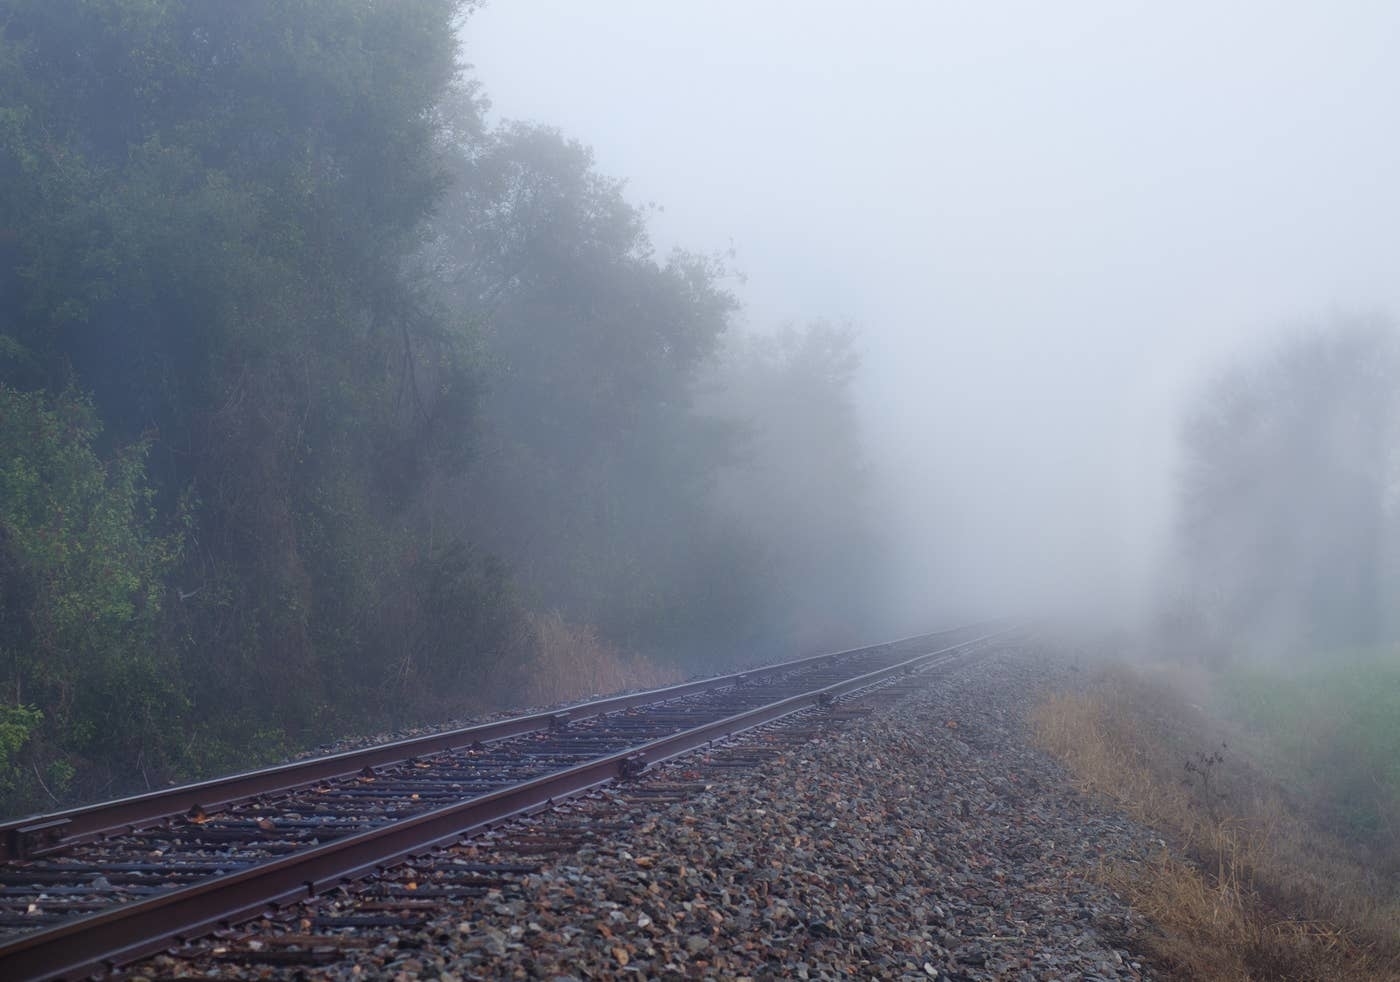 Railway goes into a fog ahead.